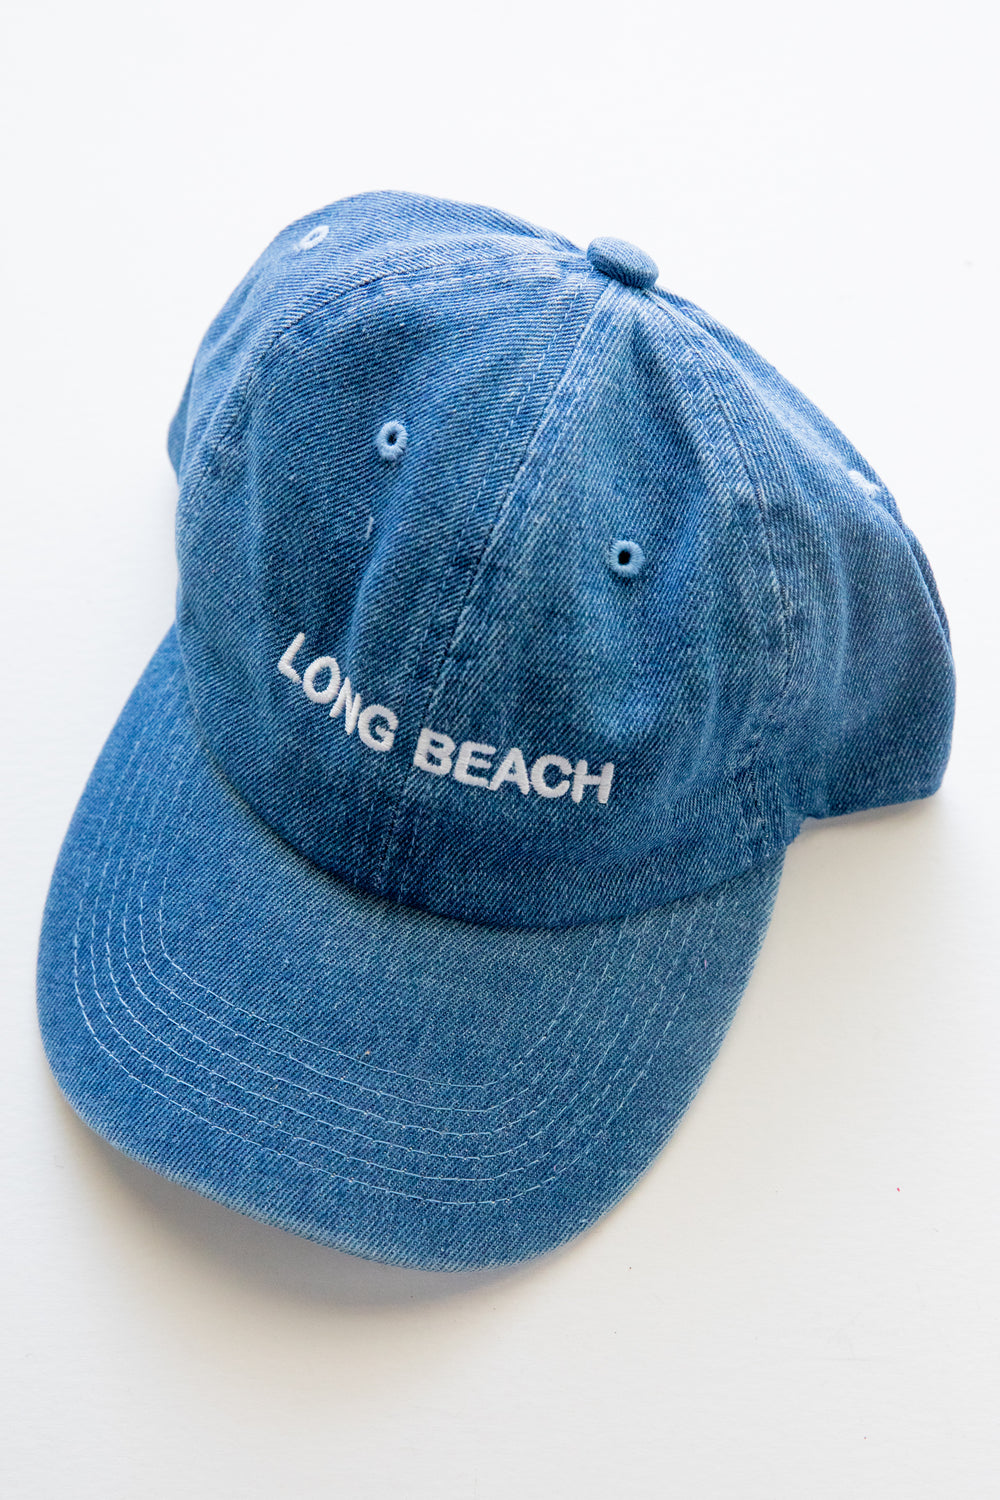 X Prism Denim Long Beach Hat